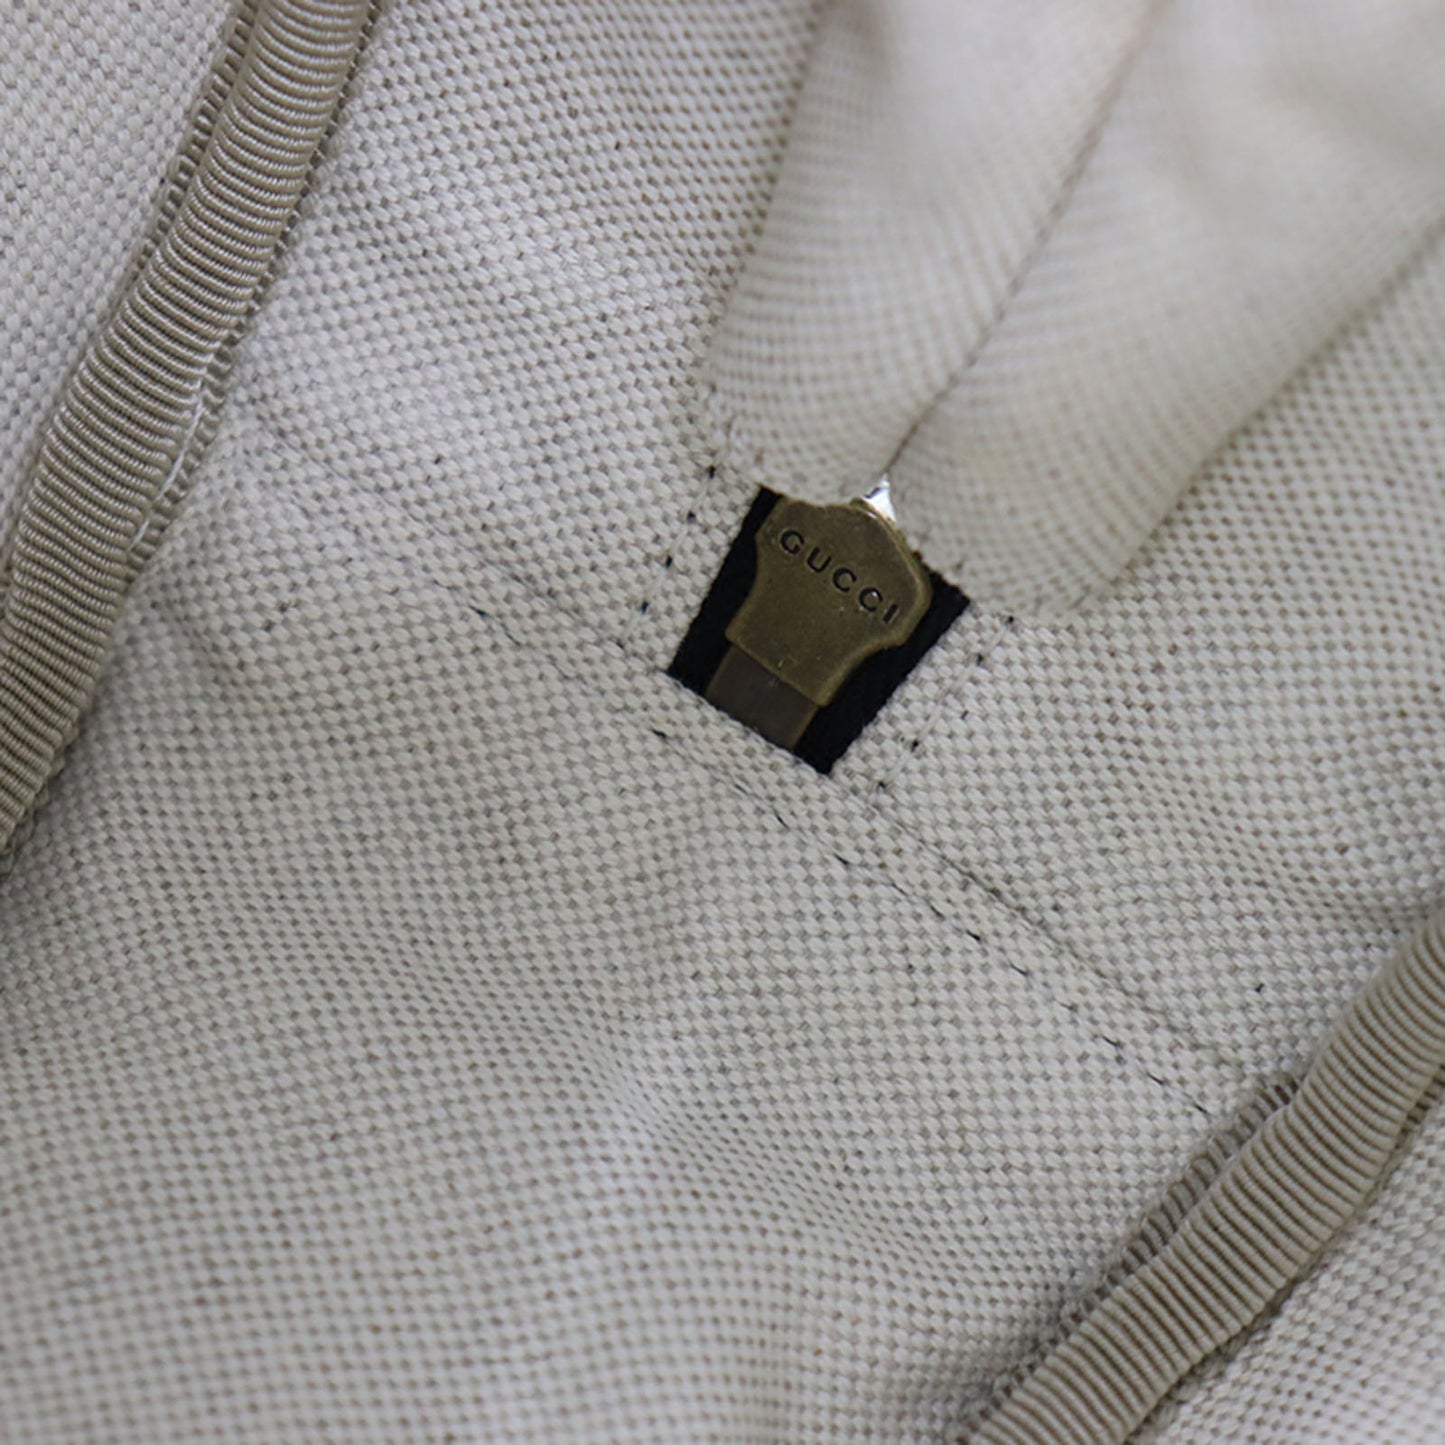 GUCCI Basket Ball Shape Handbag Black Leather #AH692